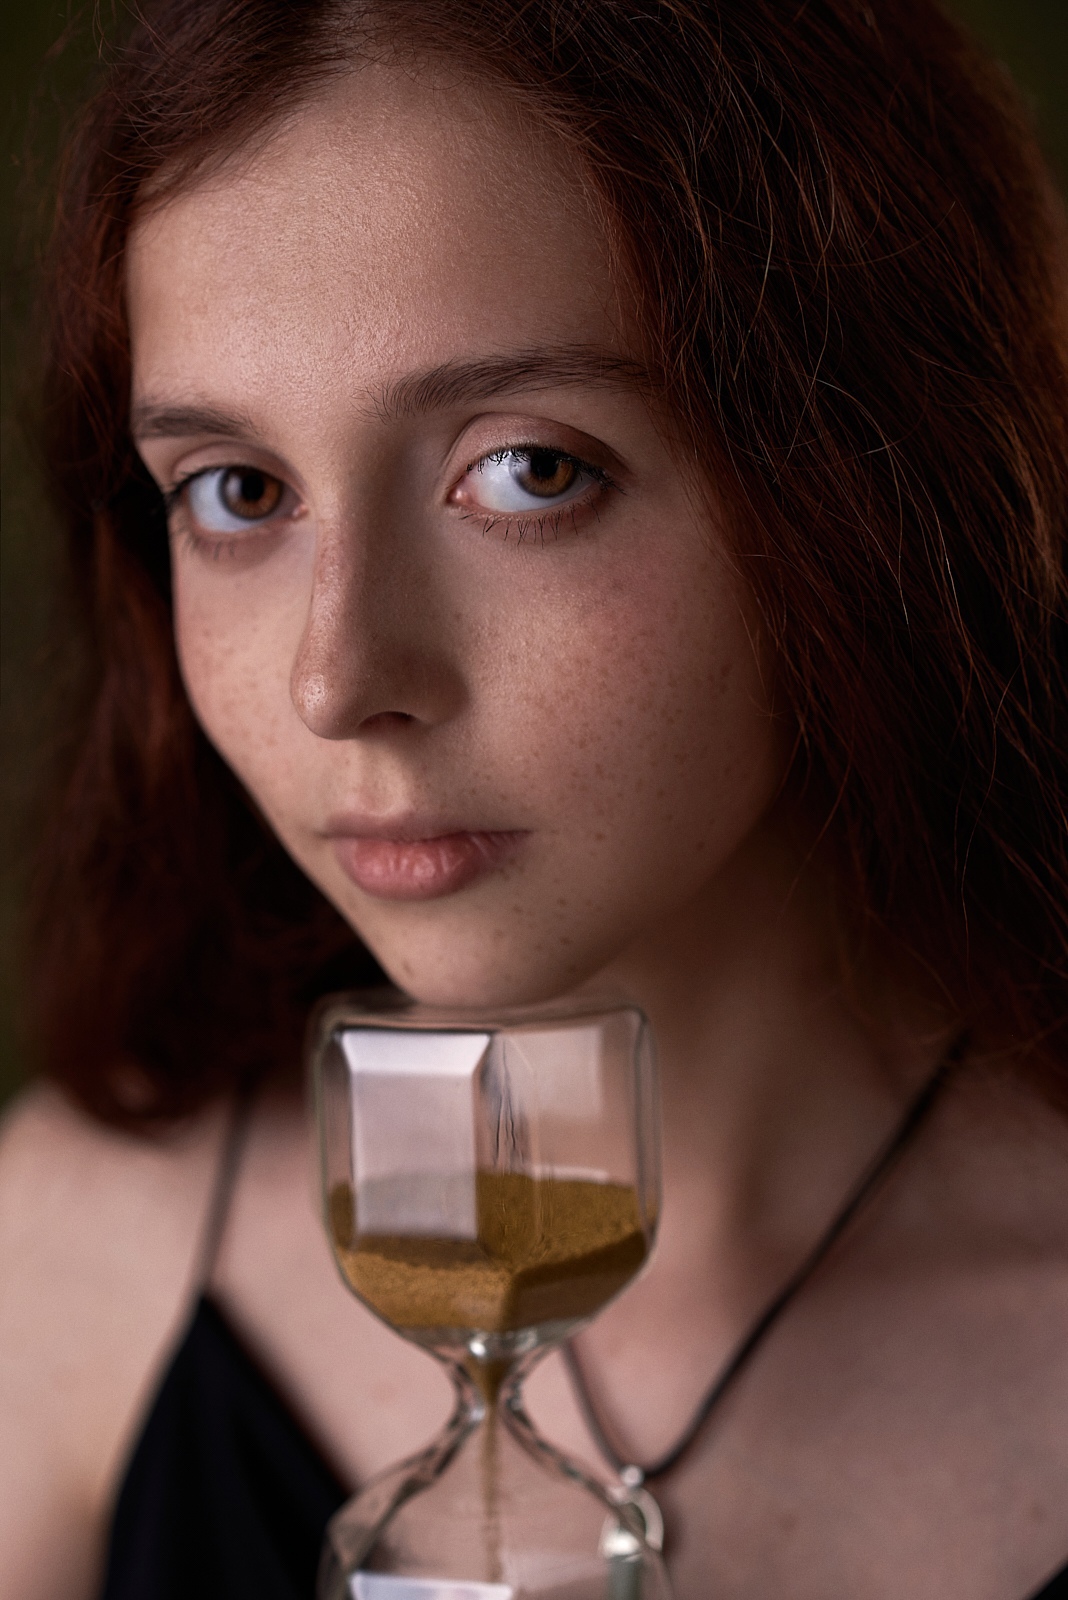 Max Pyzhik Women Redhead Brown Eyes Freckles Hourglasses Portrait 1068x1600